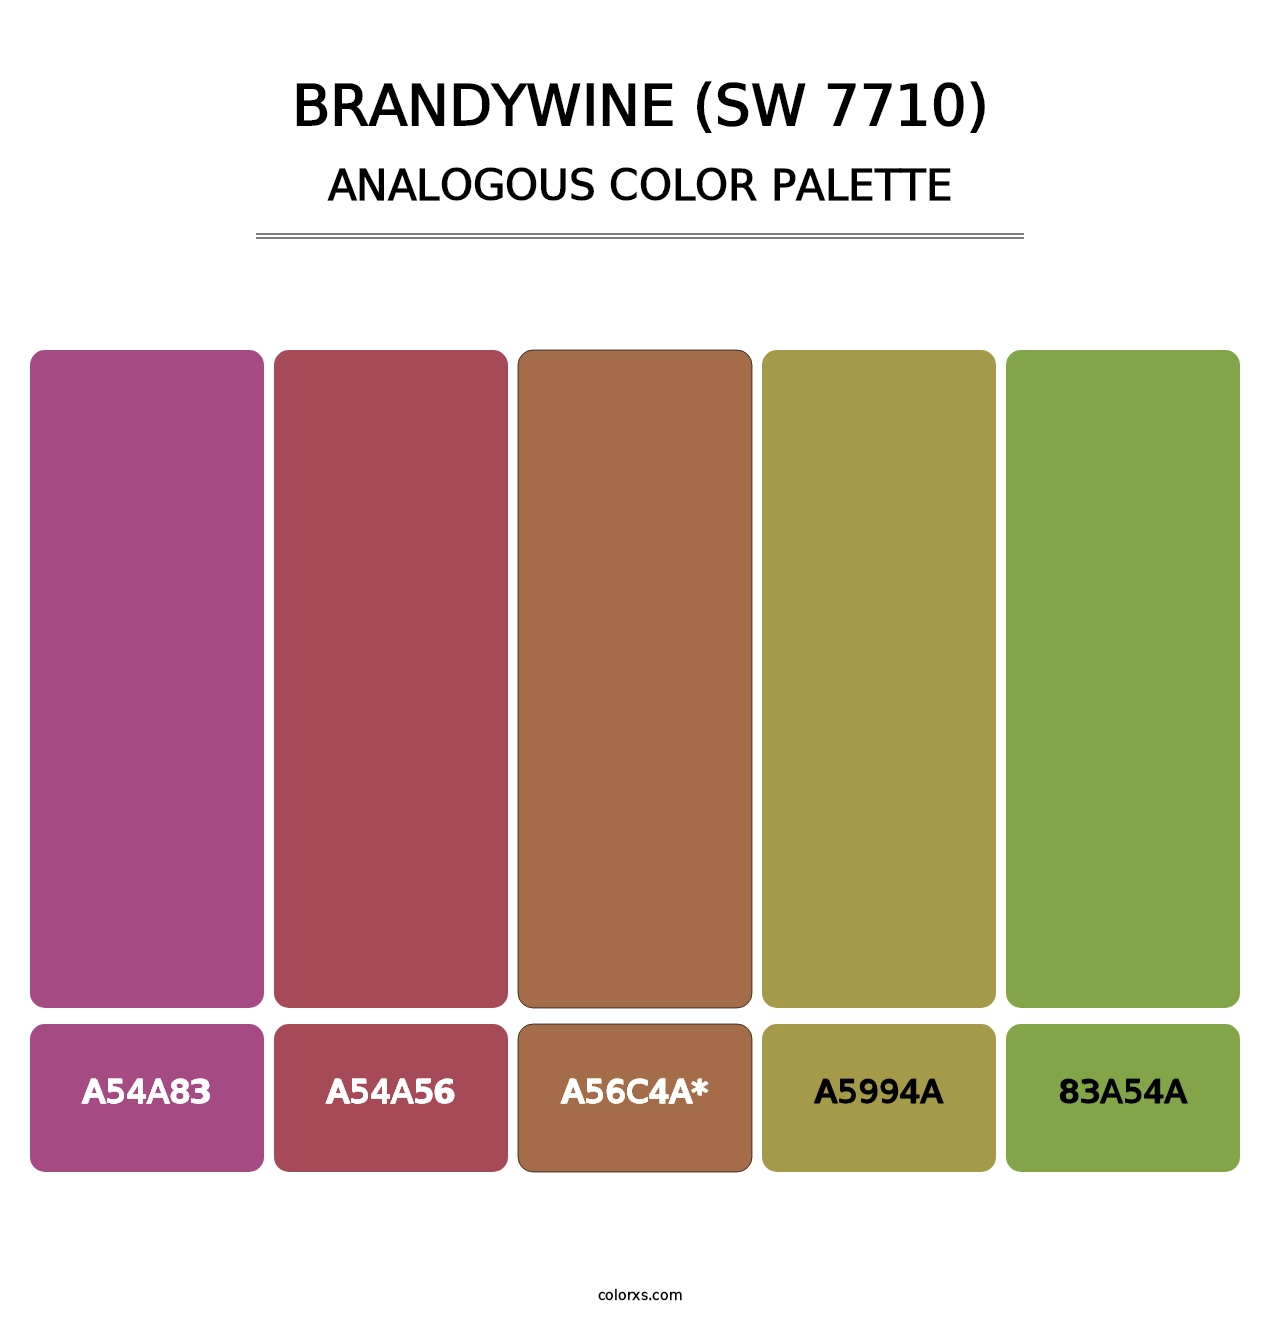 Brandywine (SW 7710) - Analogous Color Palette